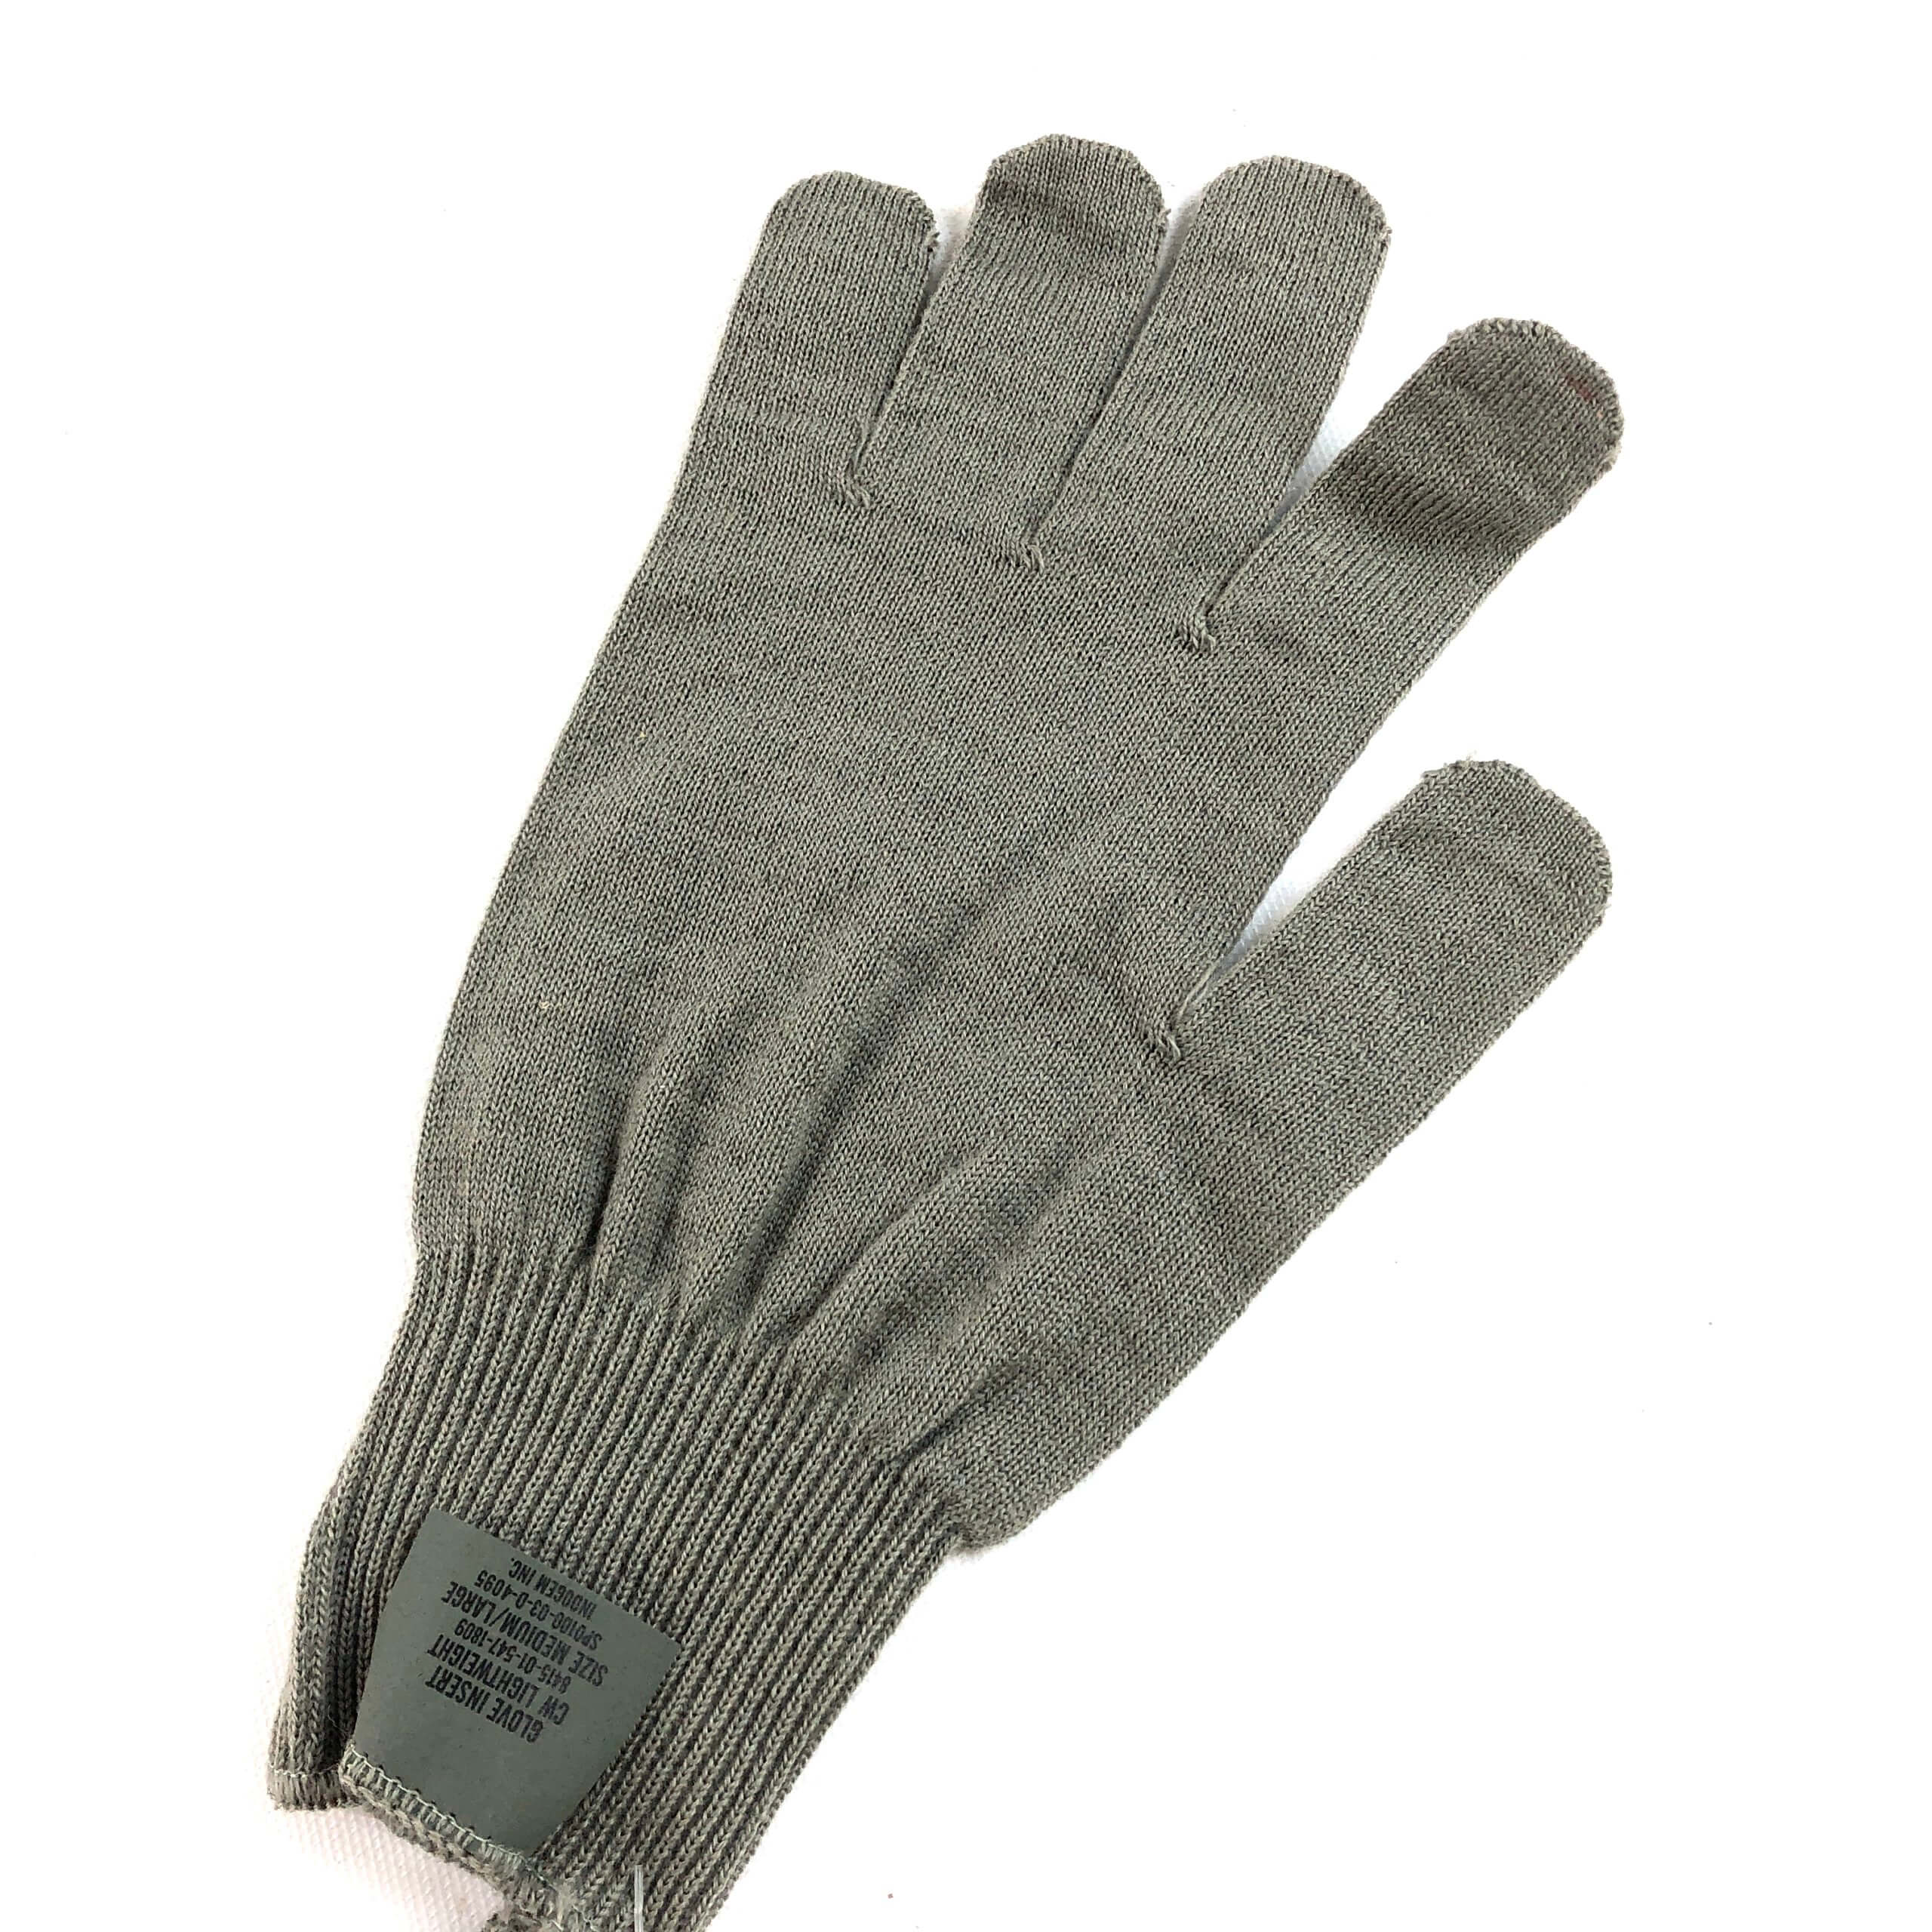 5 Glove Inserts Wool Cold Weather Military Gray USGI MEDIUM LARGE